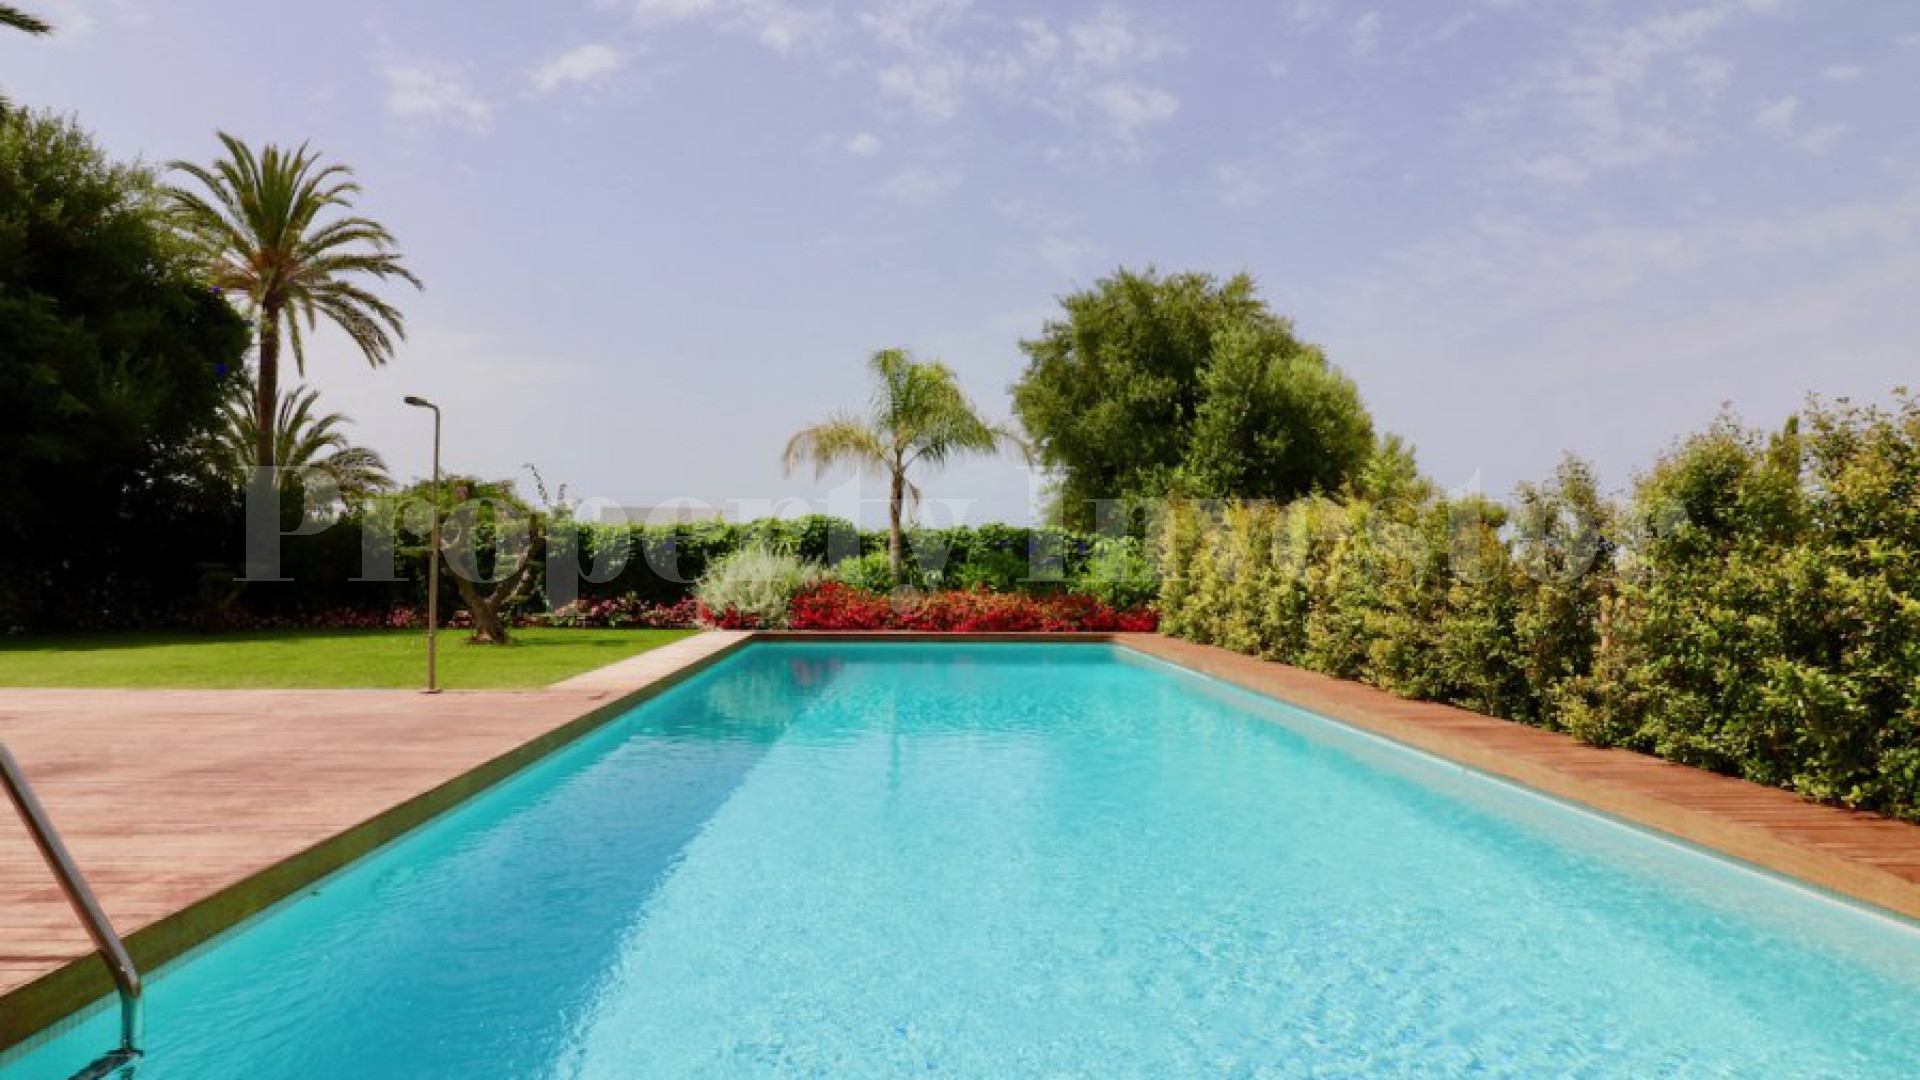 6 Bedroom Designer Villa with Amazing Garden, Pool & Rooftop Terrace in Nueva Andalucia, Marbella